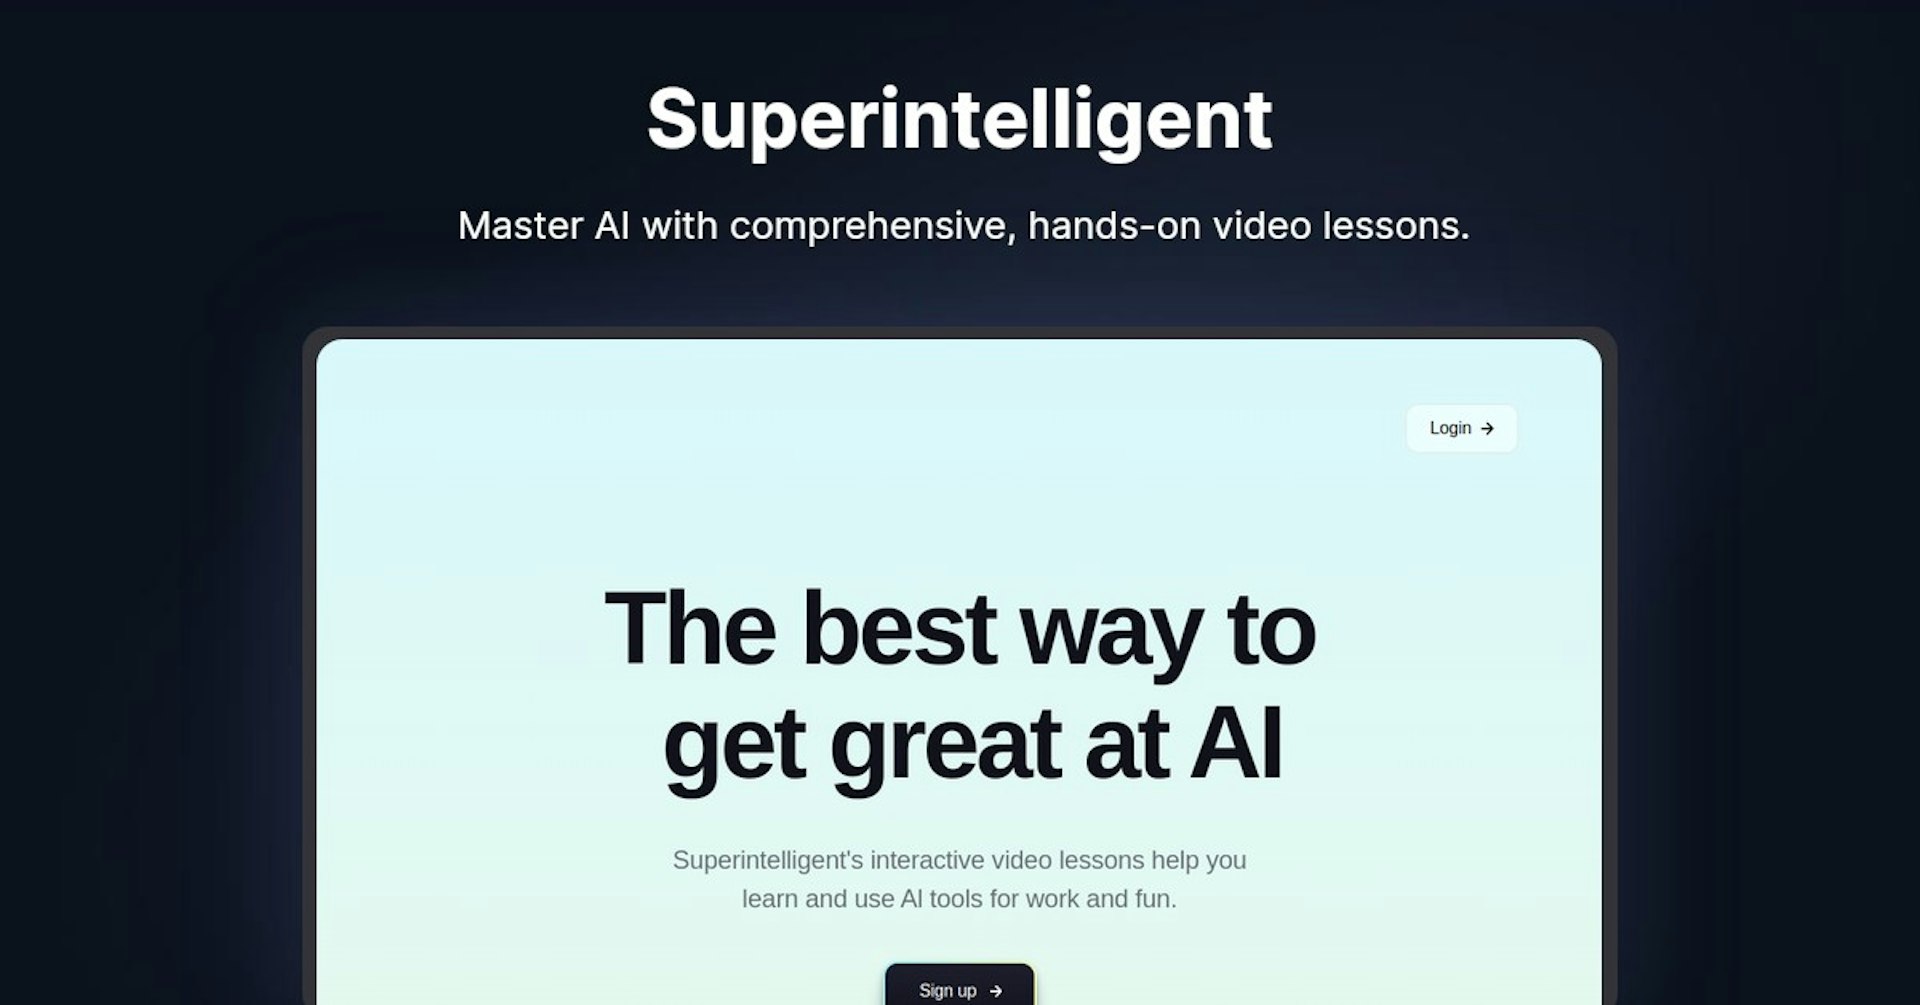 Superintelligent